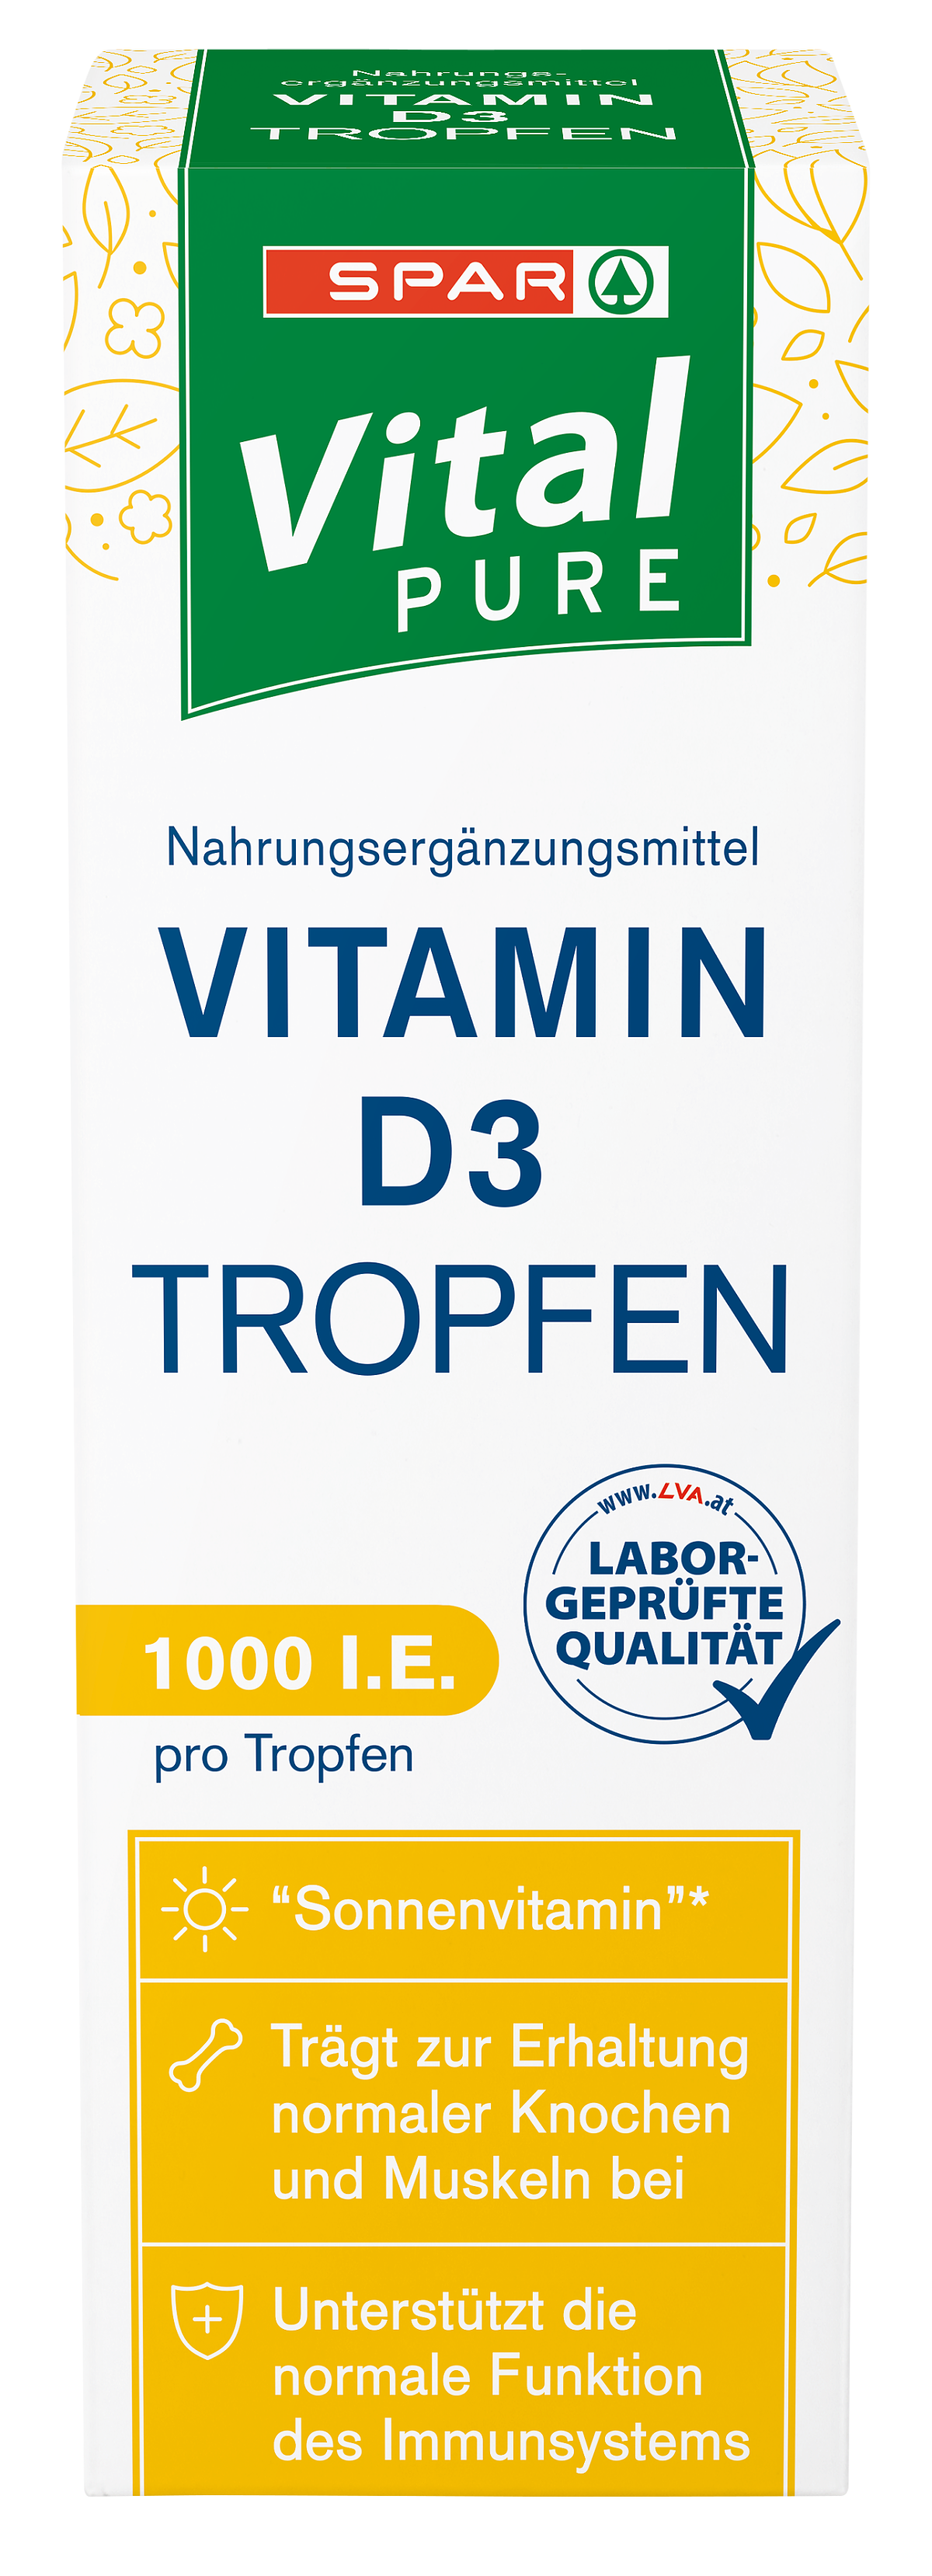 3D_VIT_PURE_Vitamin_D3